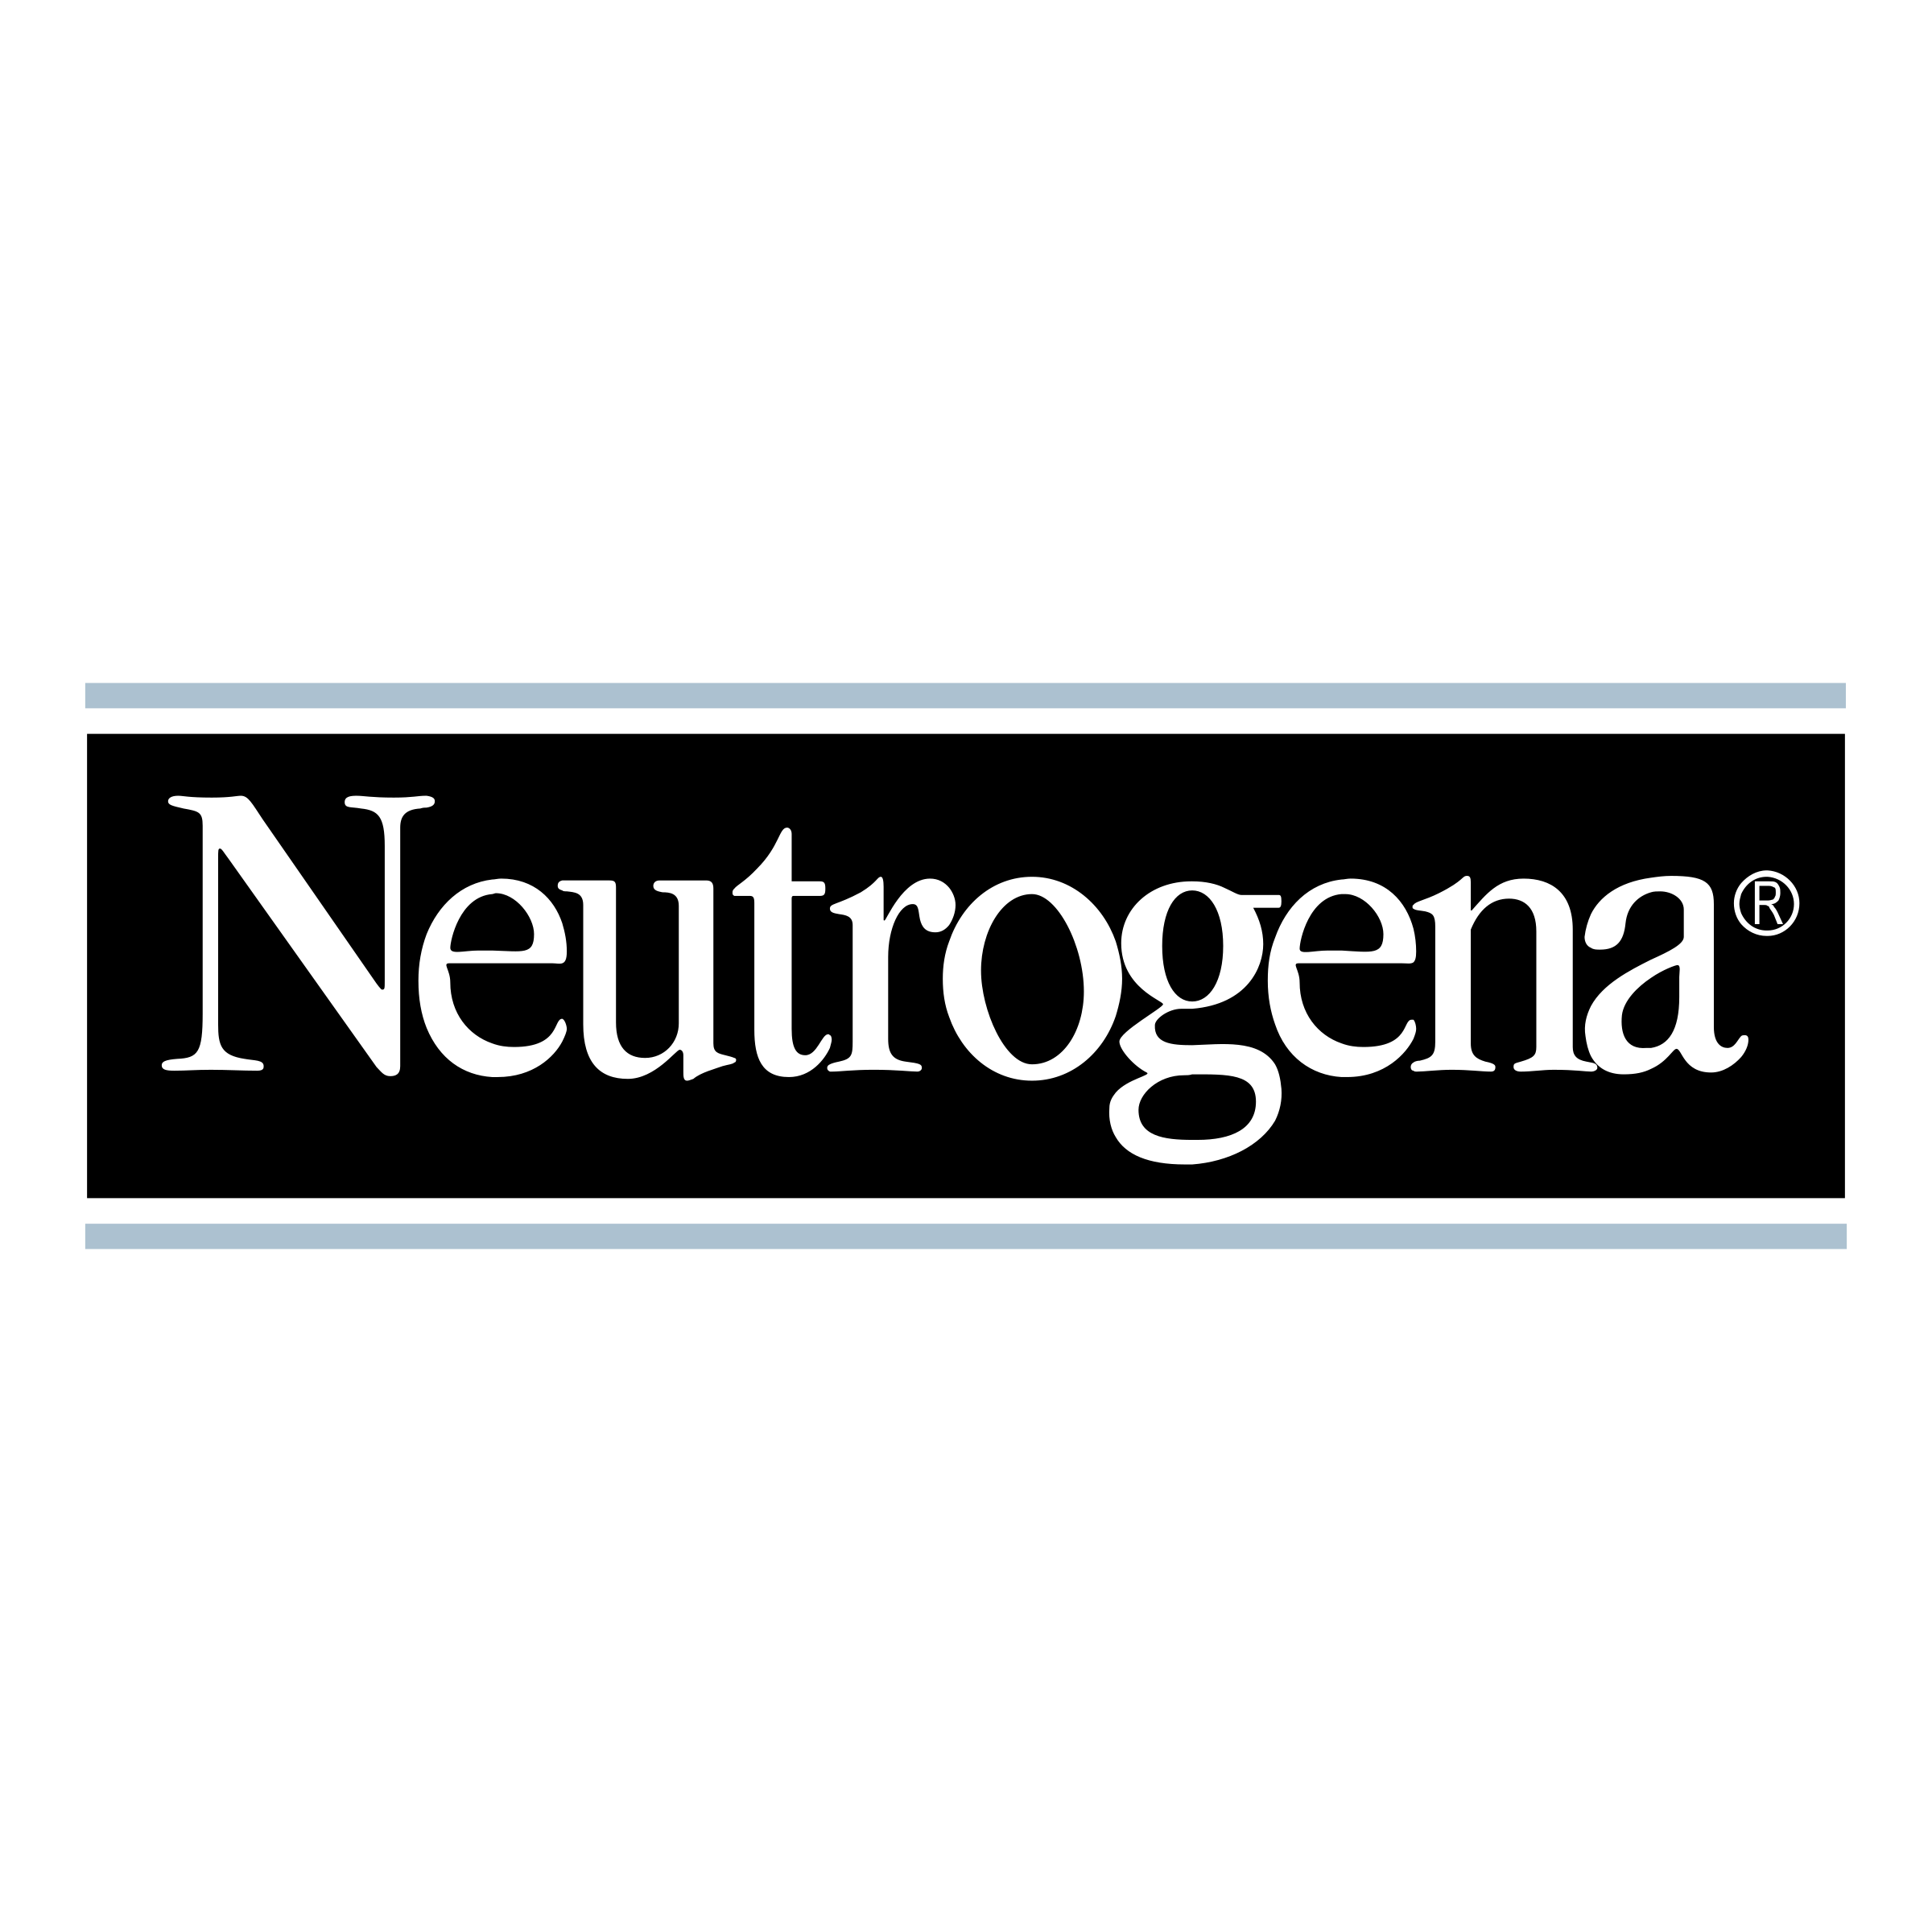 neutrogena-2-logo-png-transparent